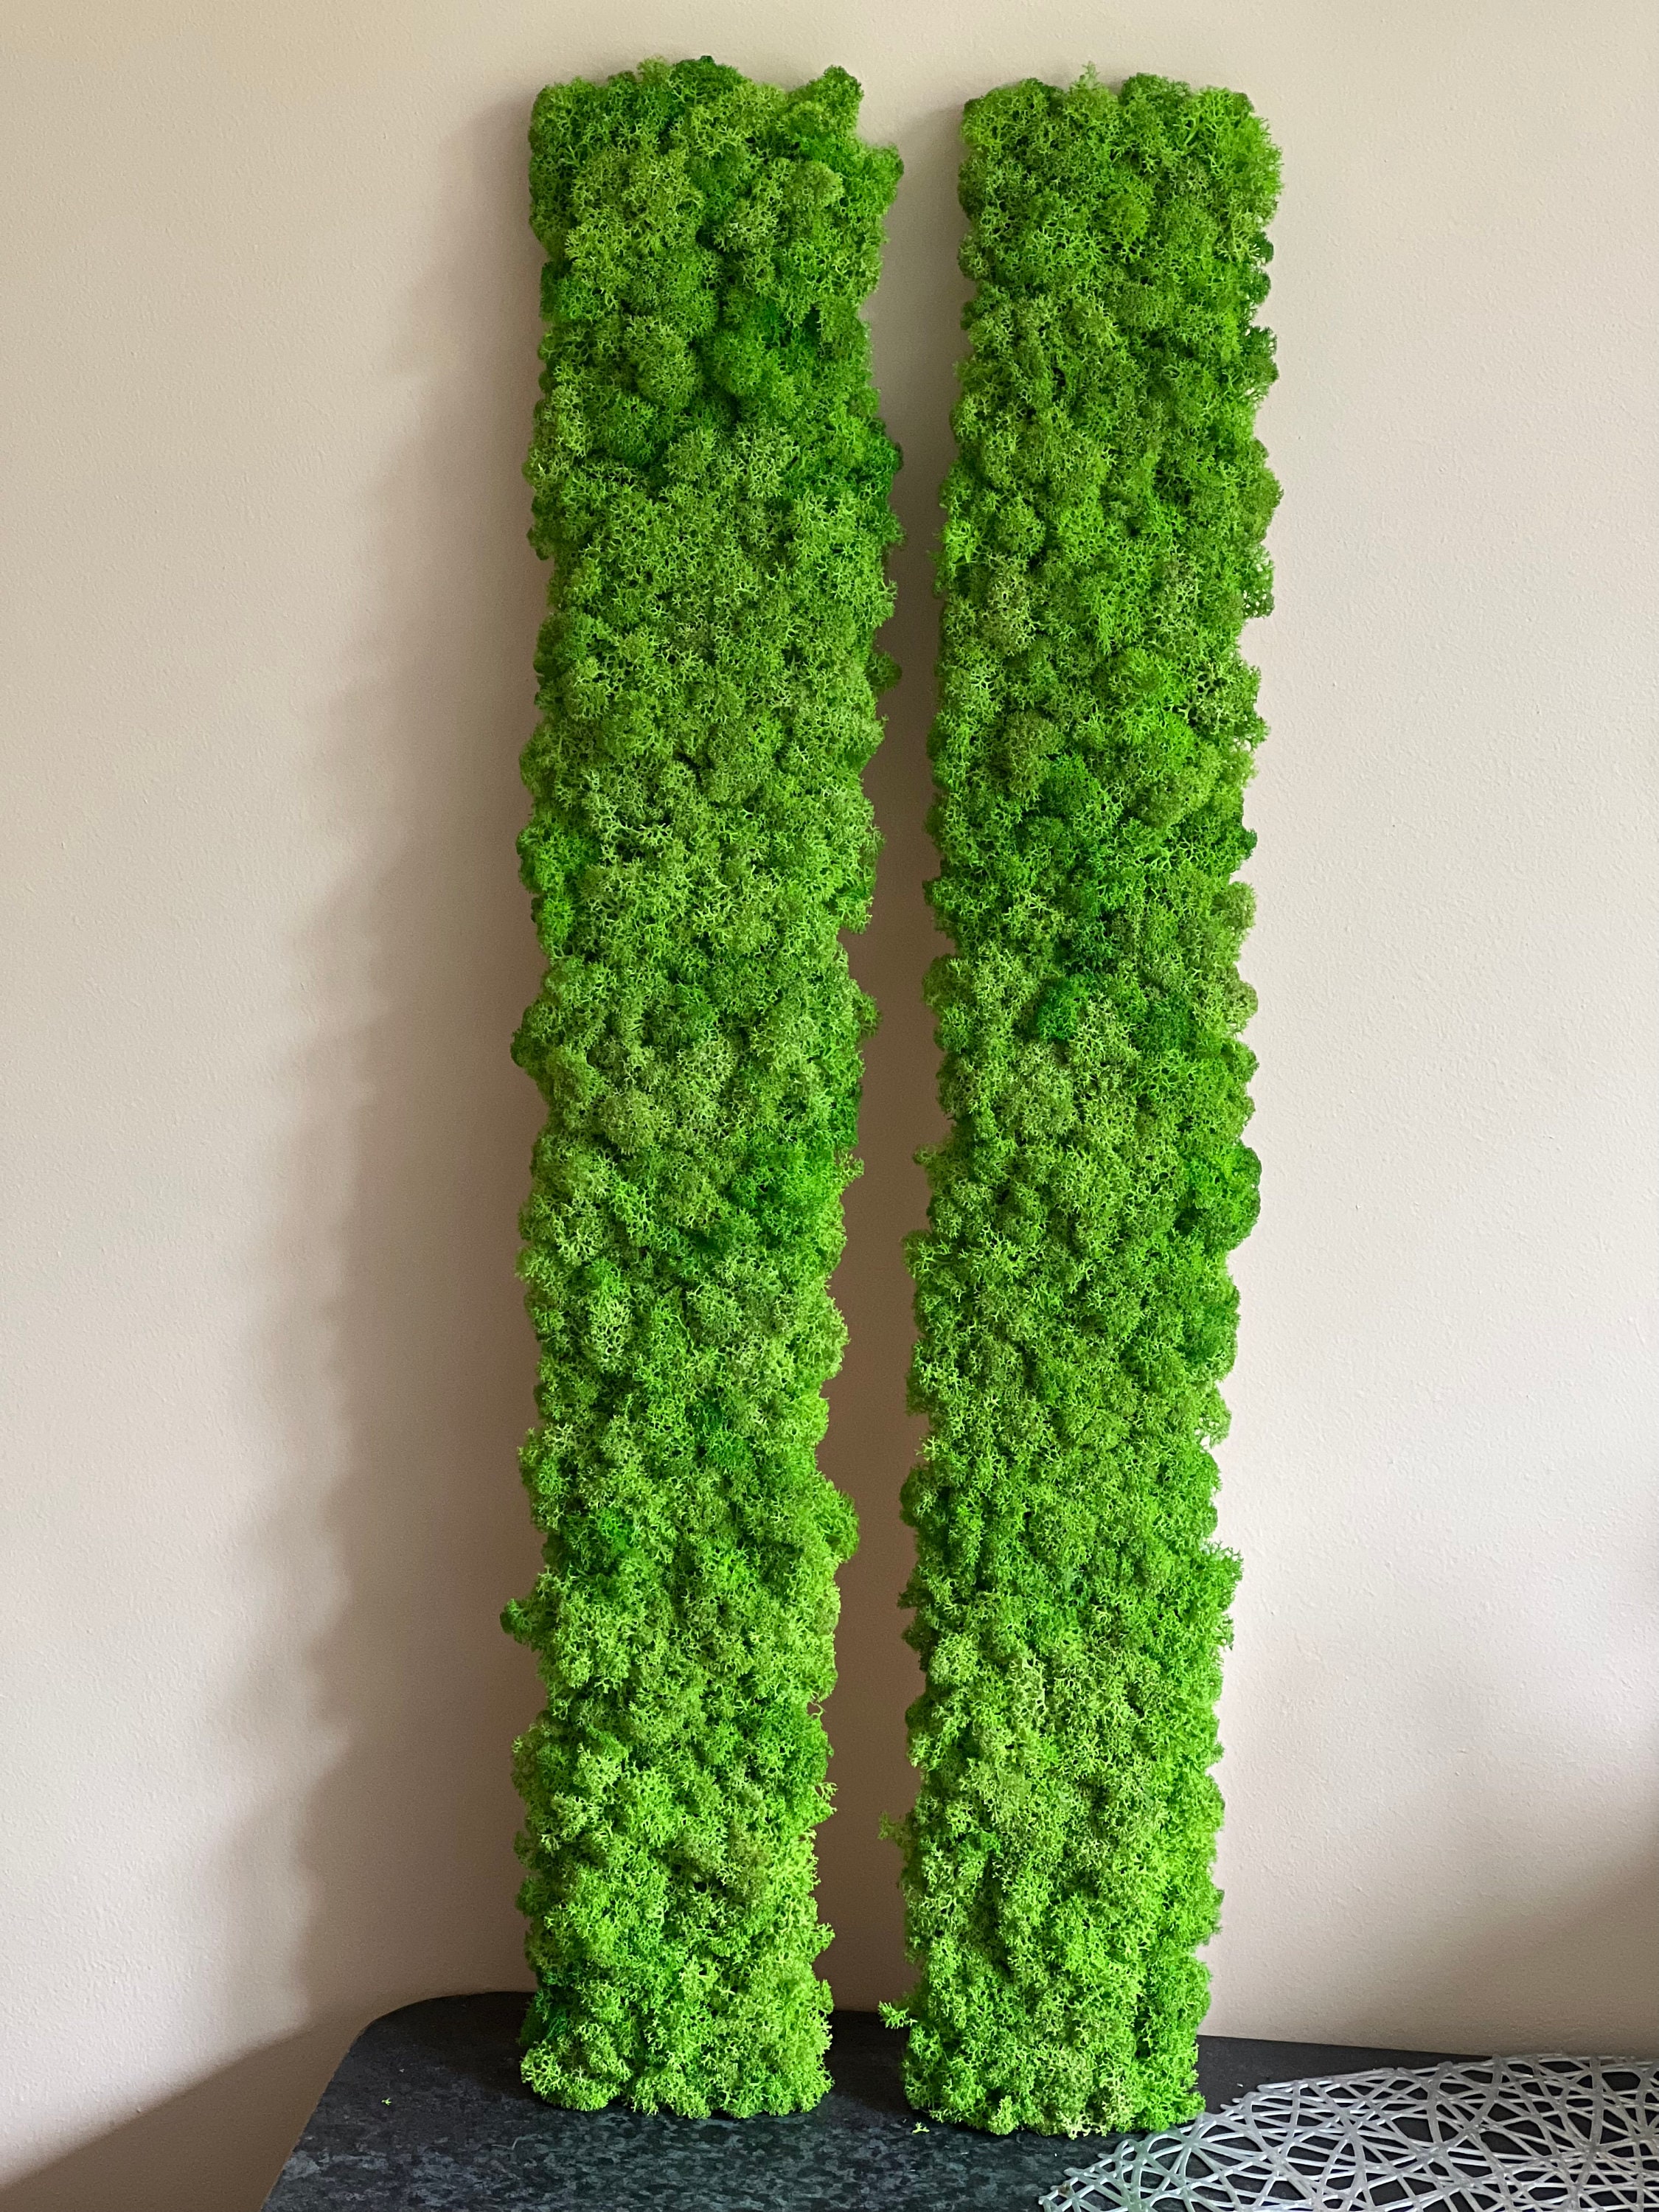 Premium Live Fresh Living Green Moss Growing on LOG Mossy Covered Wood  Branch Stick Terrarium Mossarium Supplies 30cm 